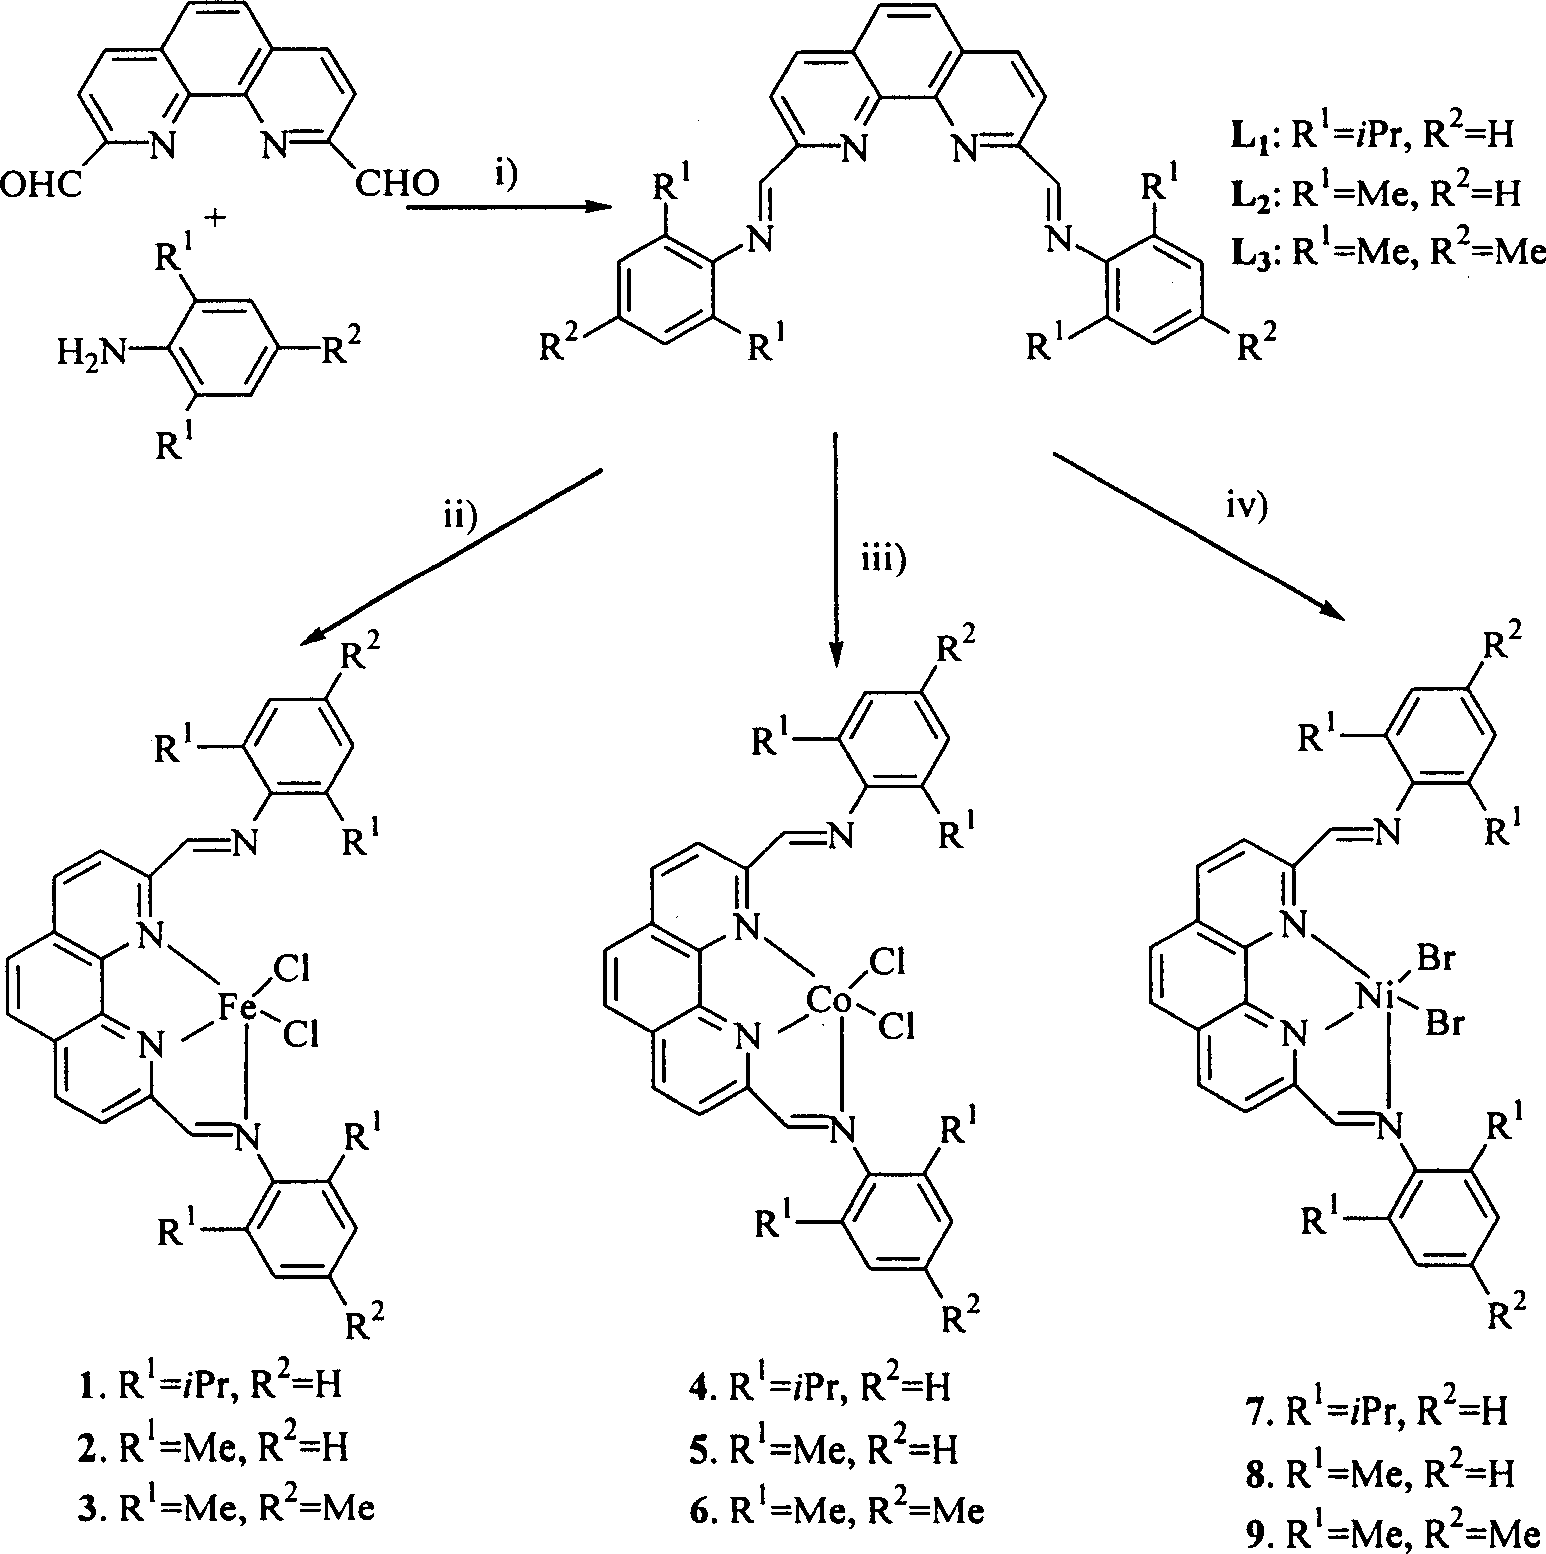 Ethene oligomerization and polymerization post transition metal complex catalyst